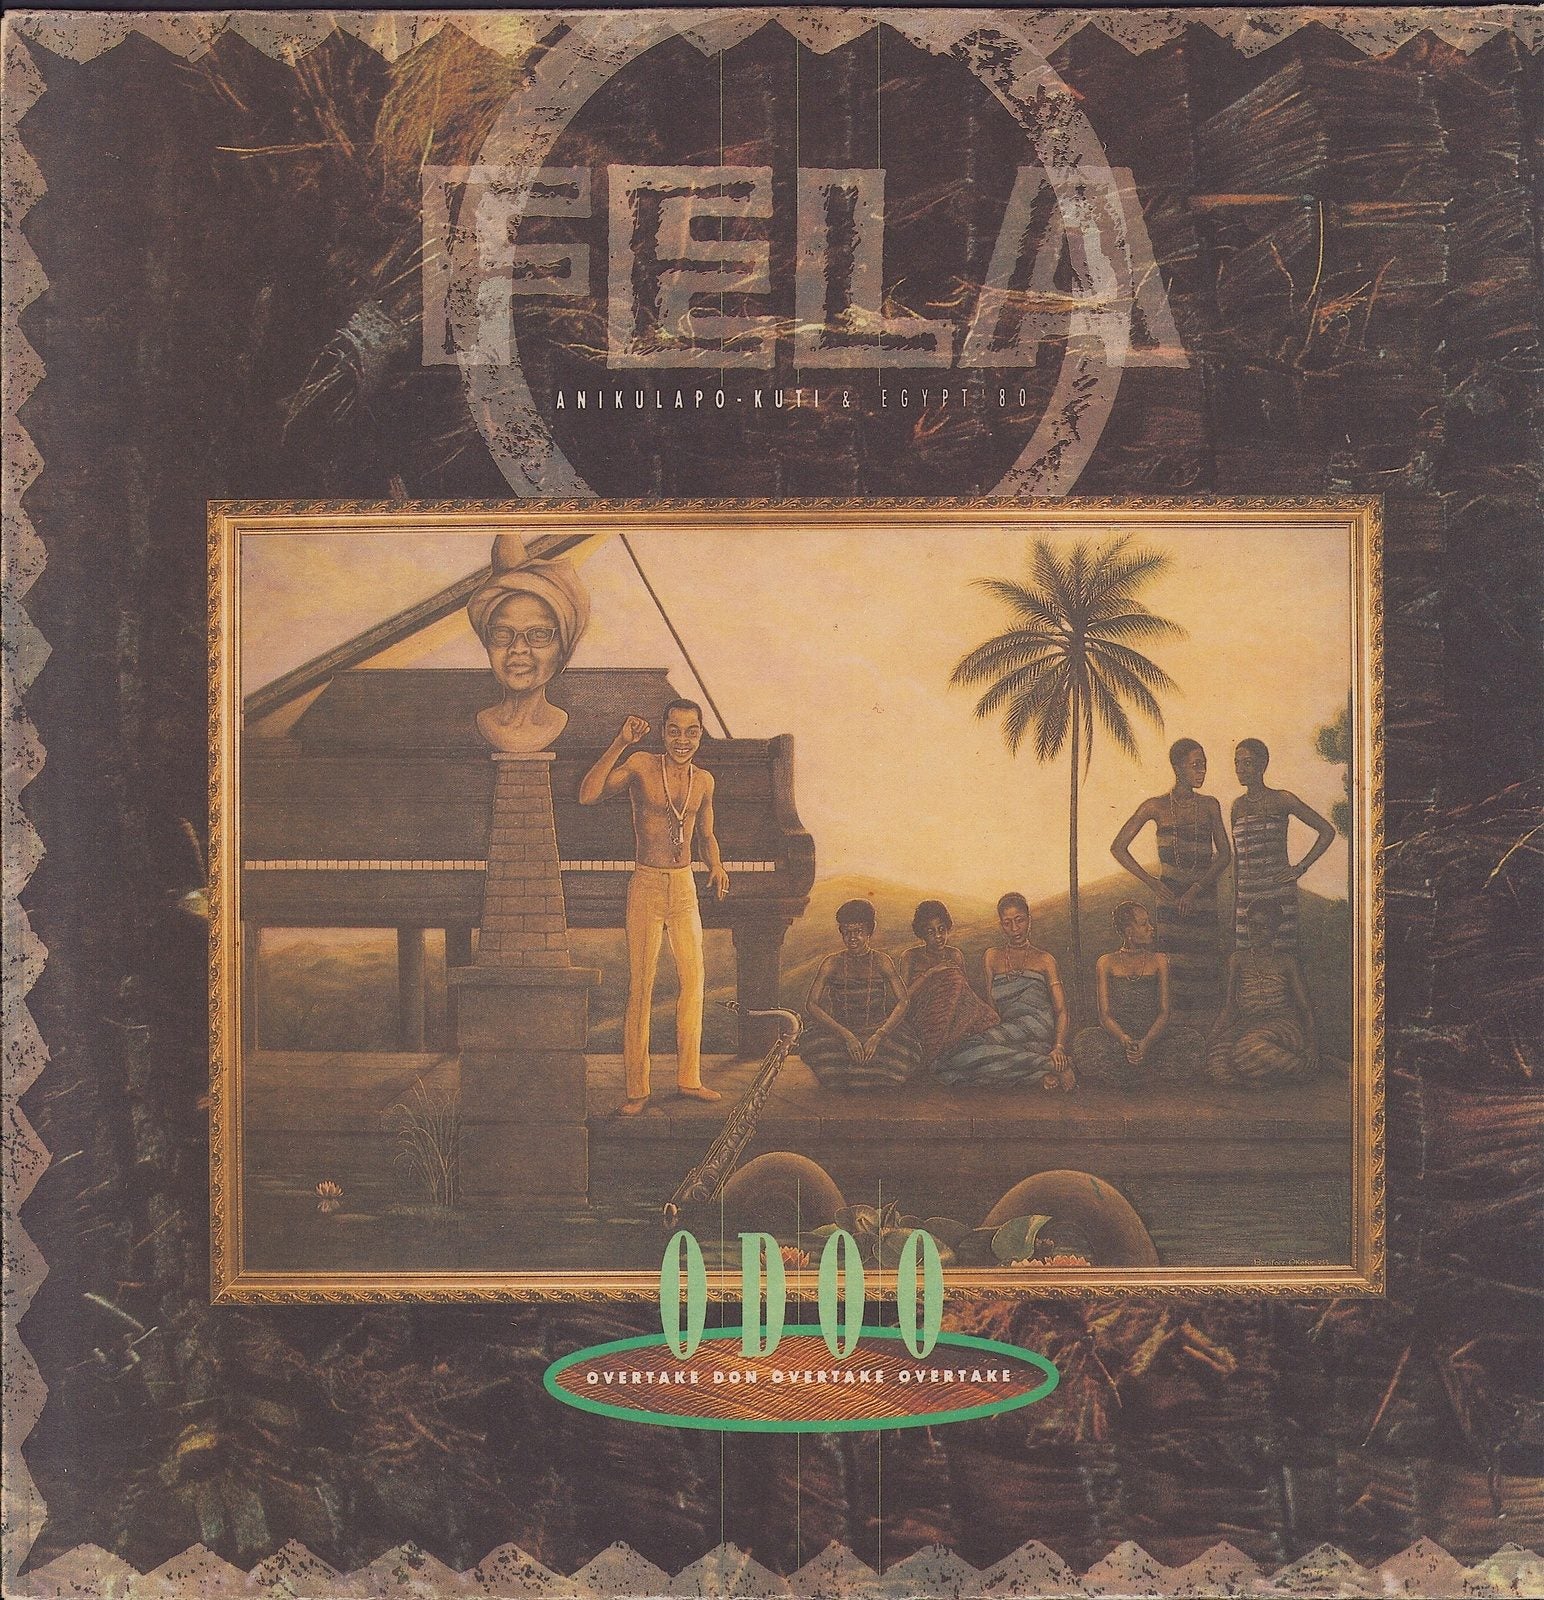 Fela Anikulapo-Kuti & Egypt '80 ‎- ODOO (Overtake Don Overtake Overtake) (Vinyl LP) FR